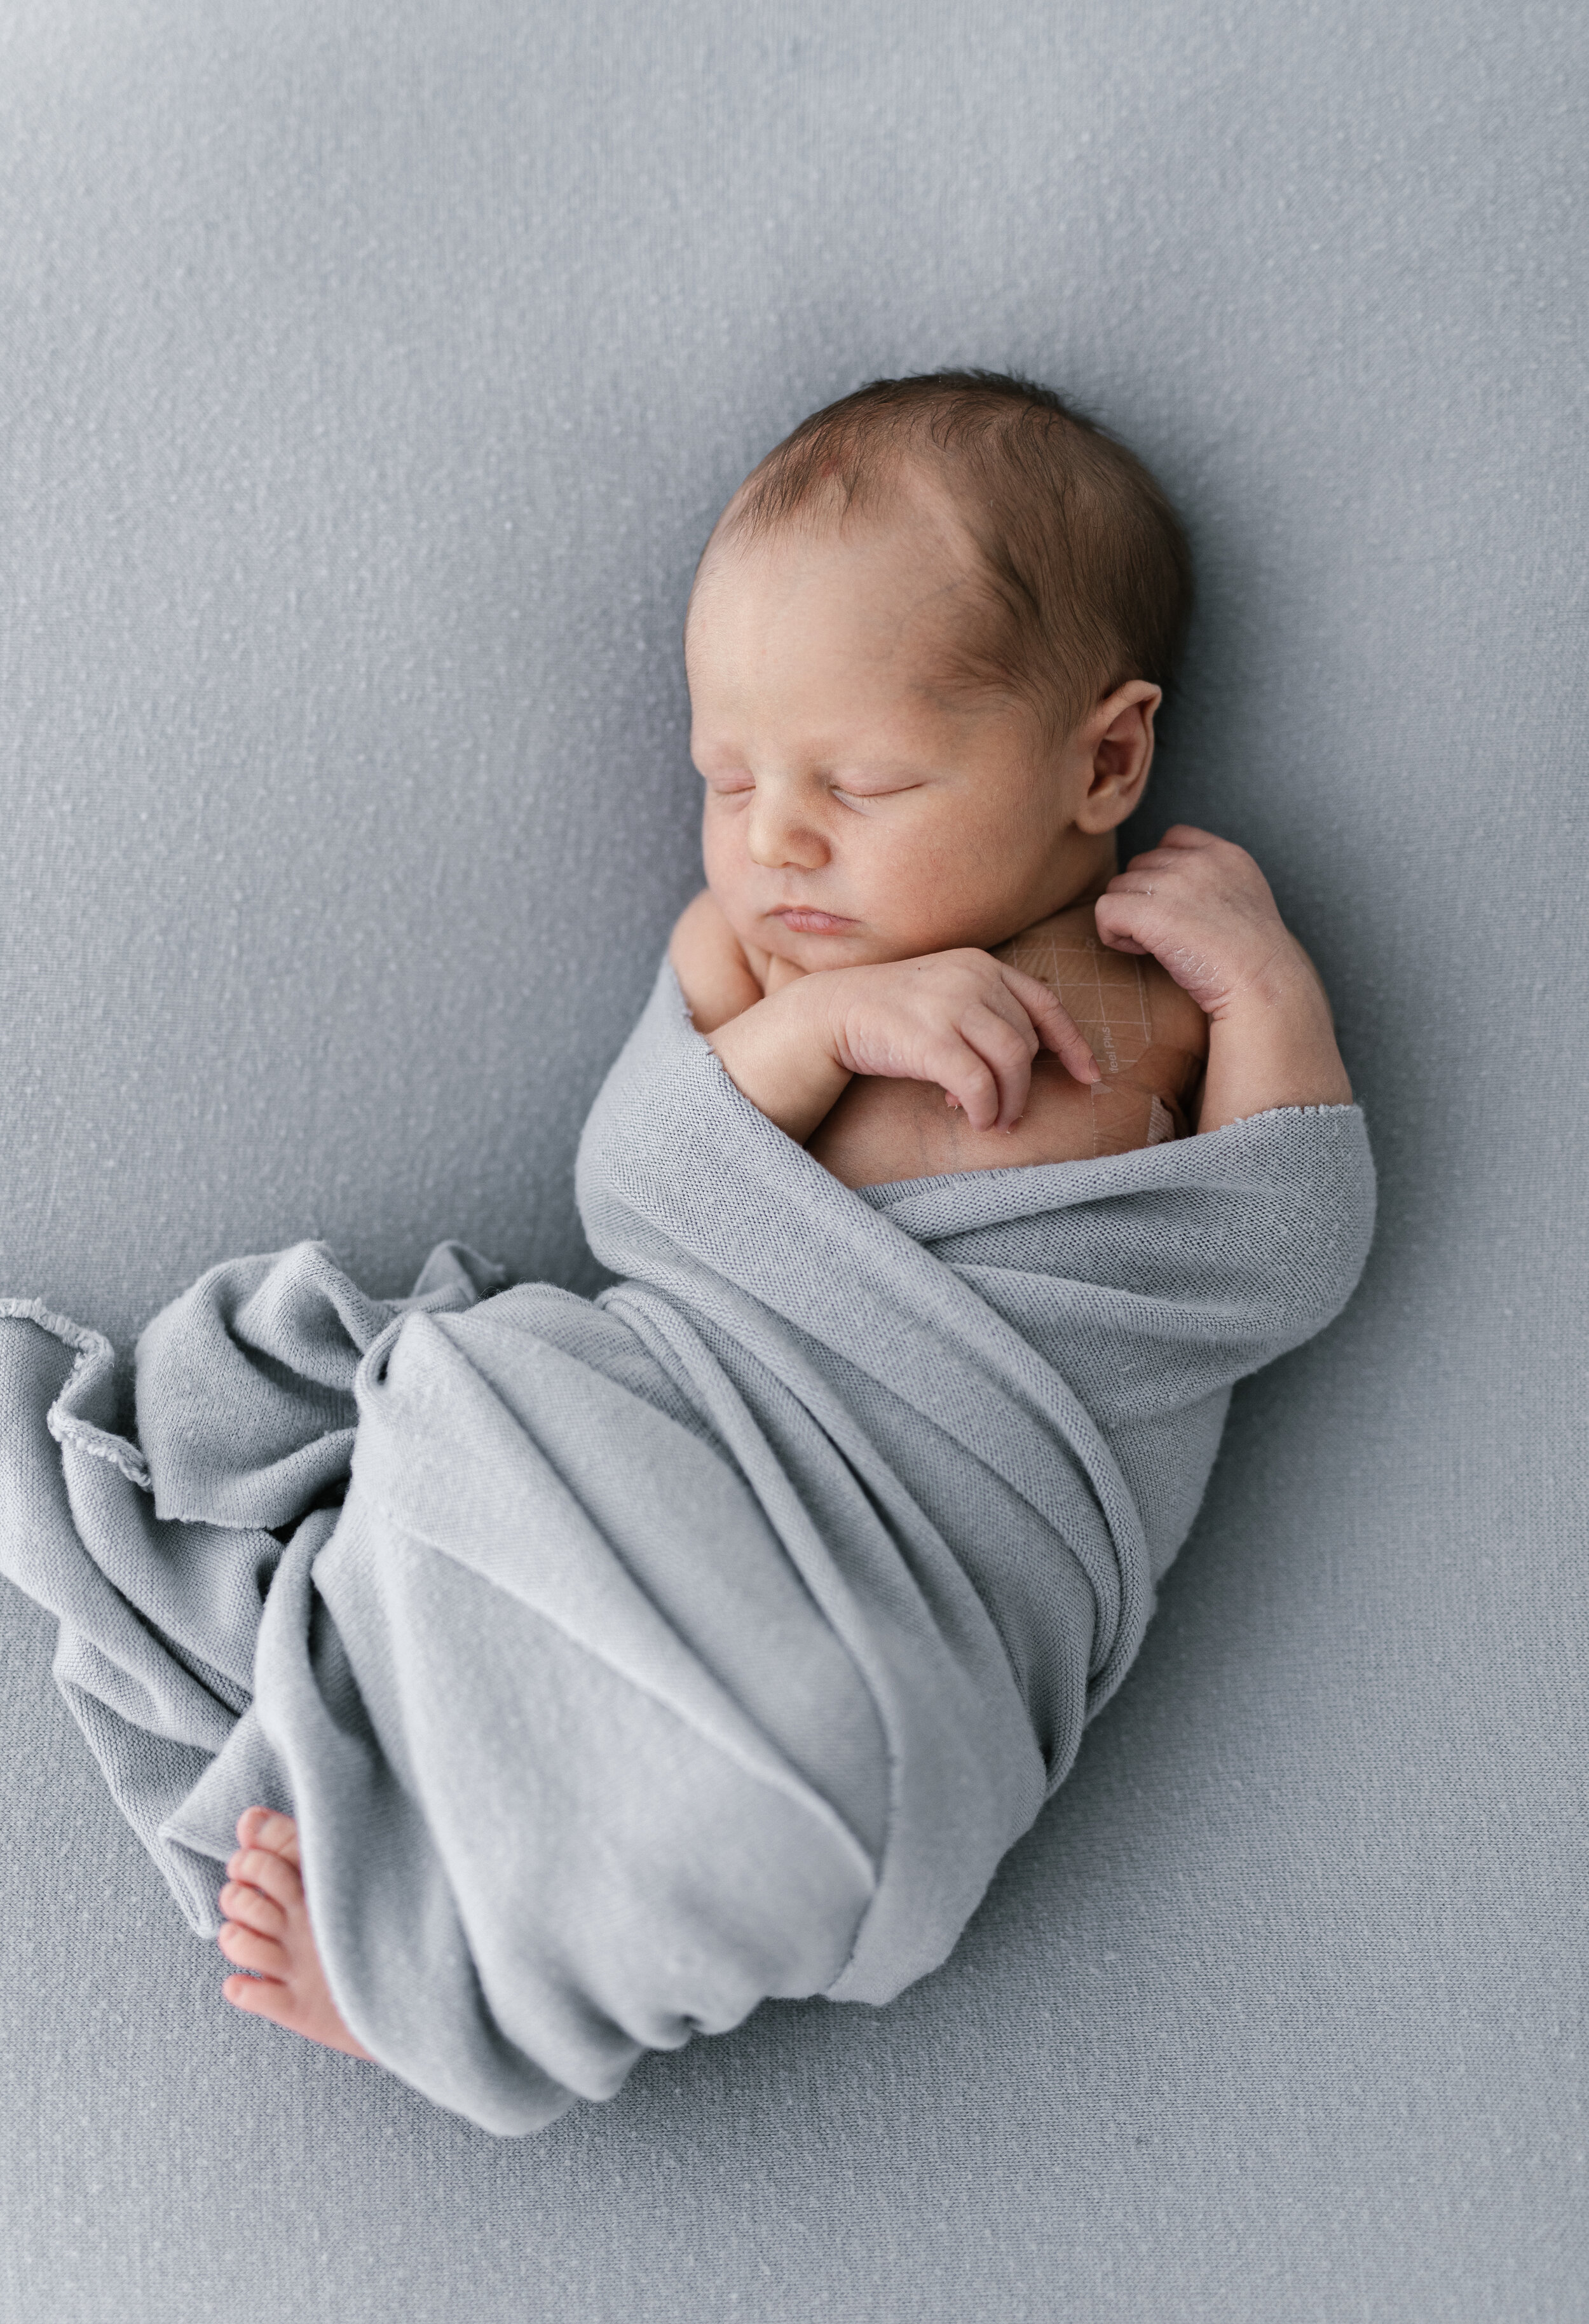 newborn baby boy wrapped in a soft blue blanket